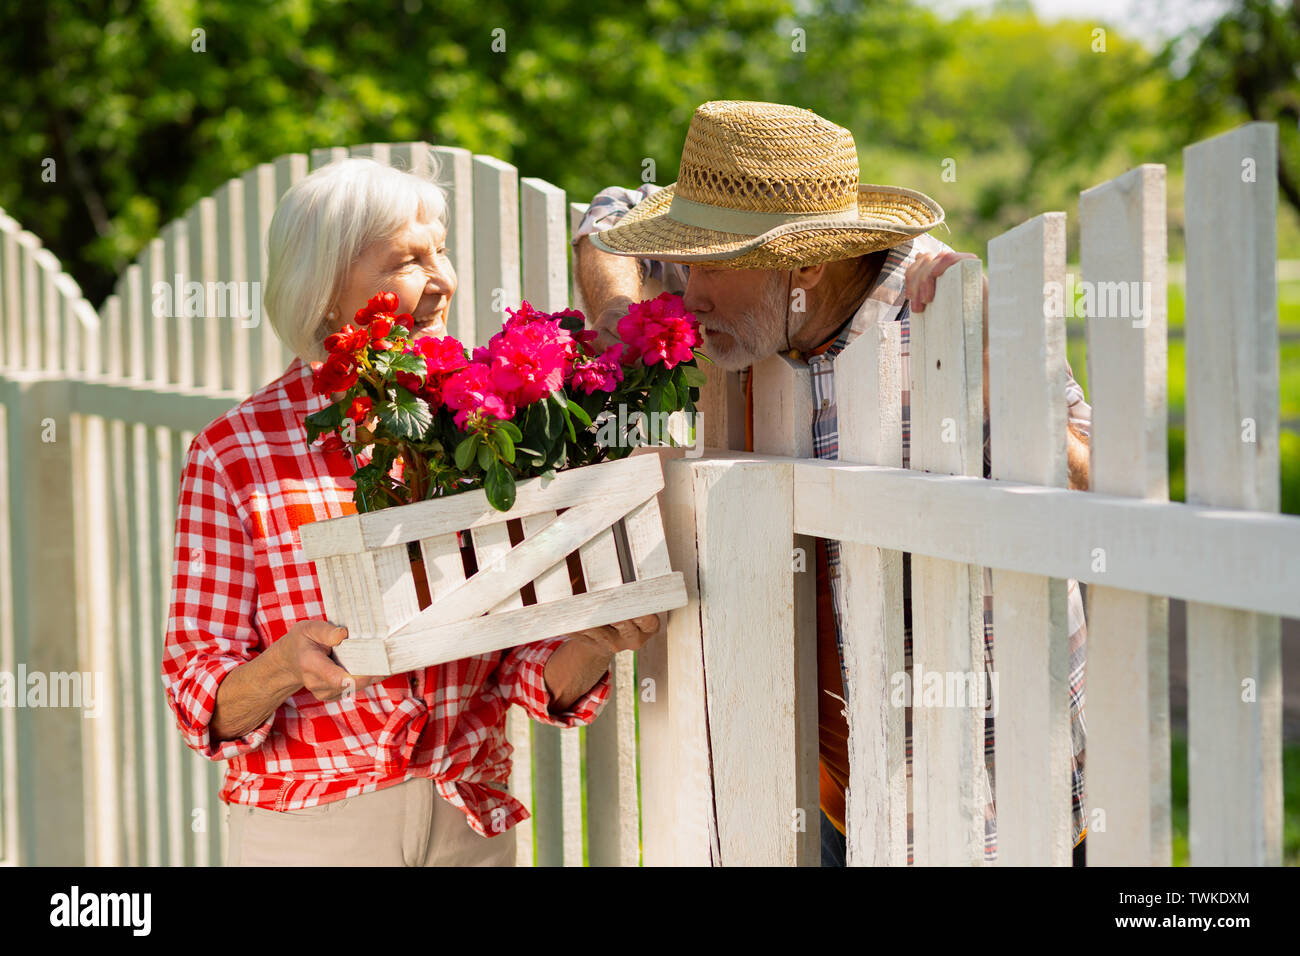 Smelling pink flowers. Bearded man wearing straw hat smelling pink flowers while talking with neighbor Stock Photo